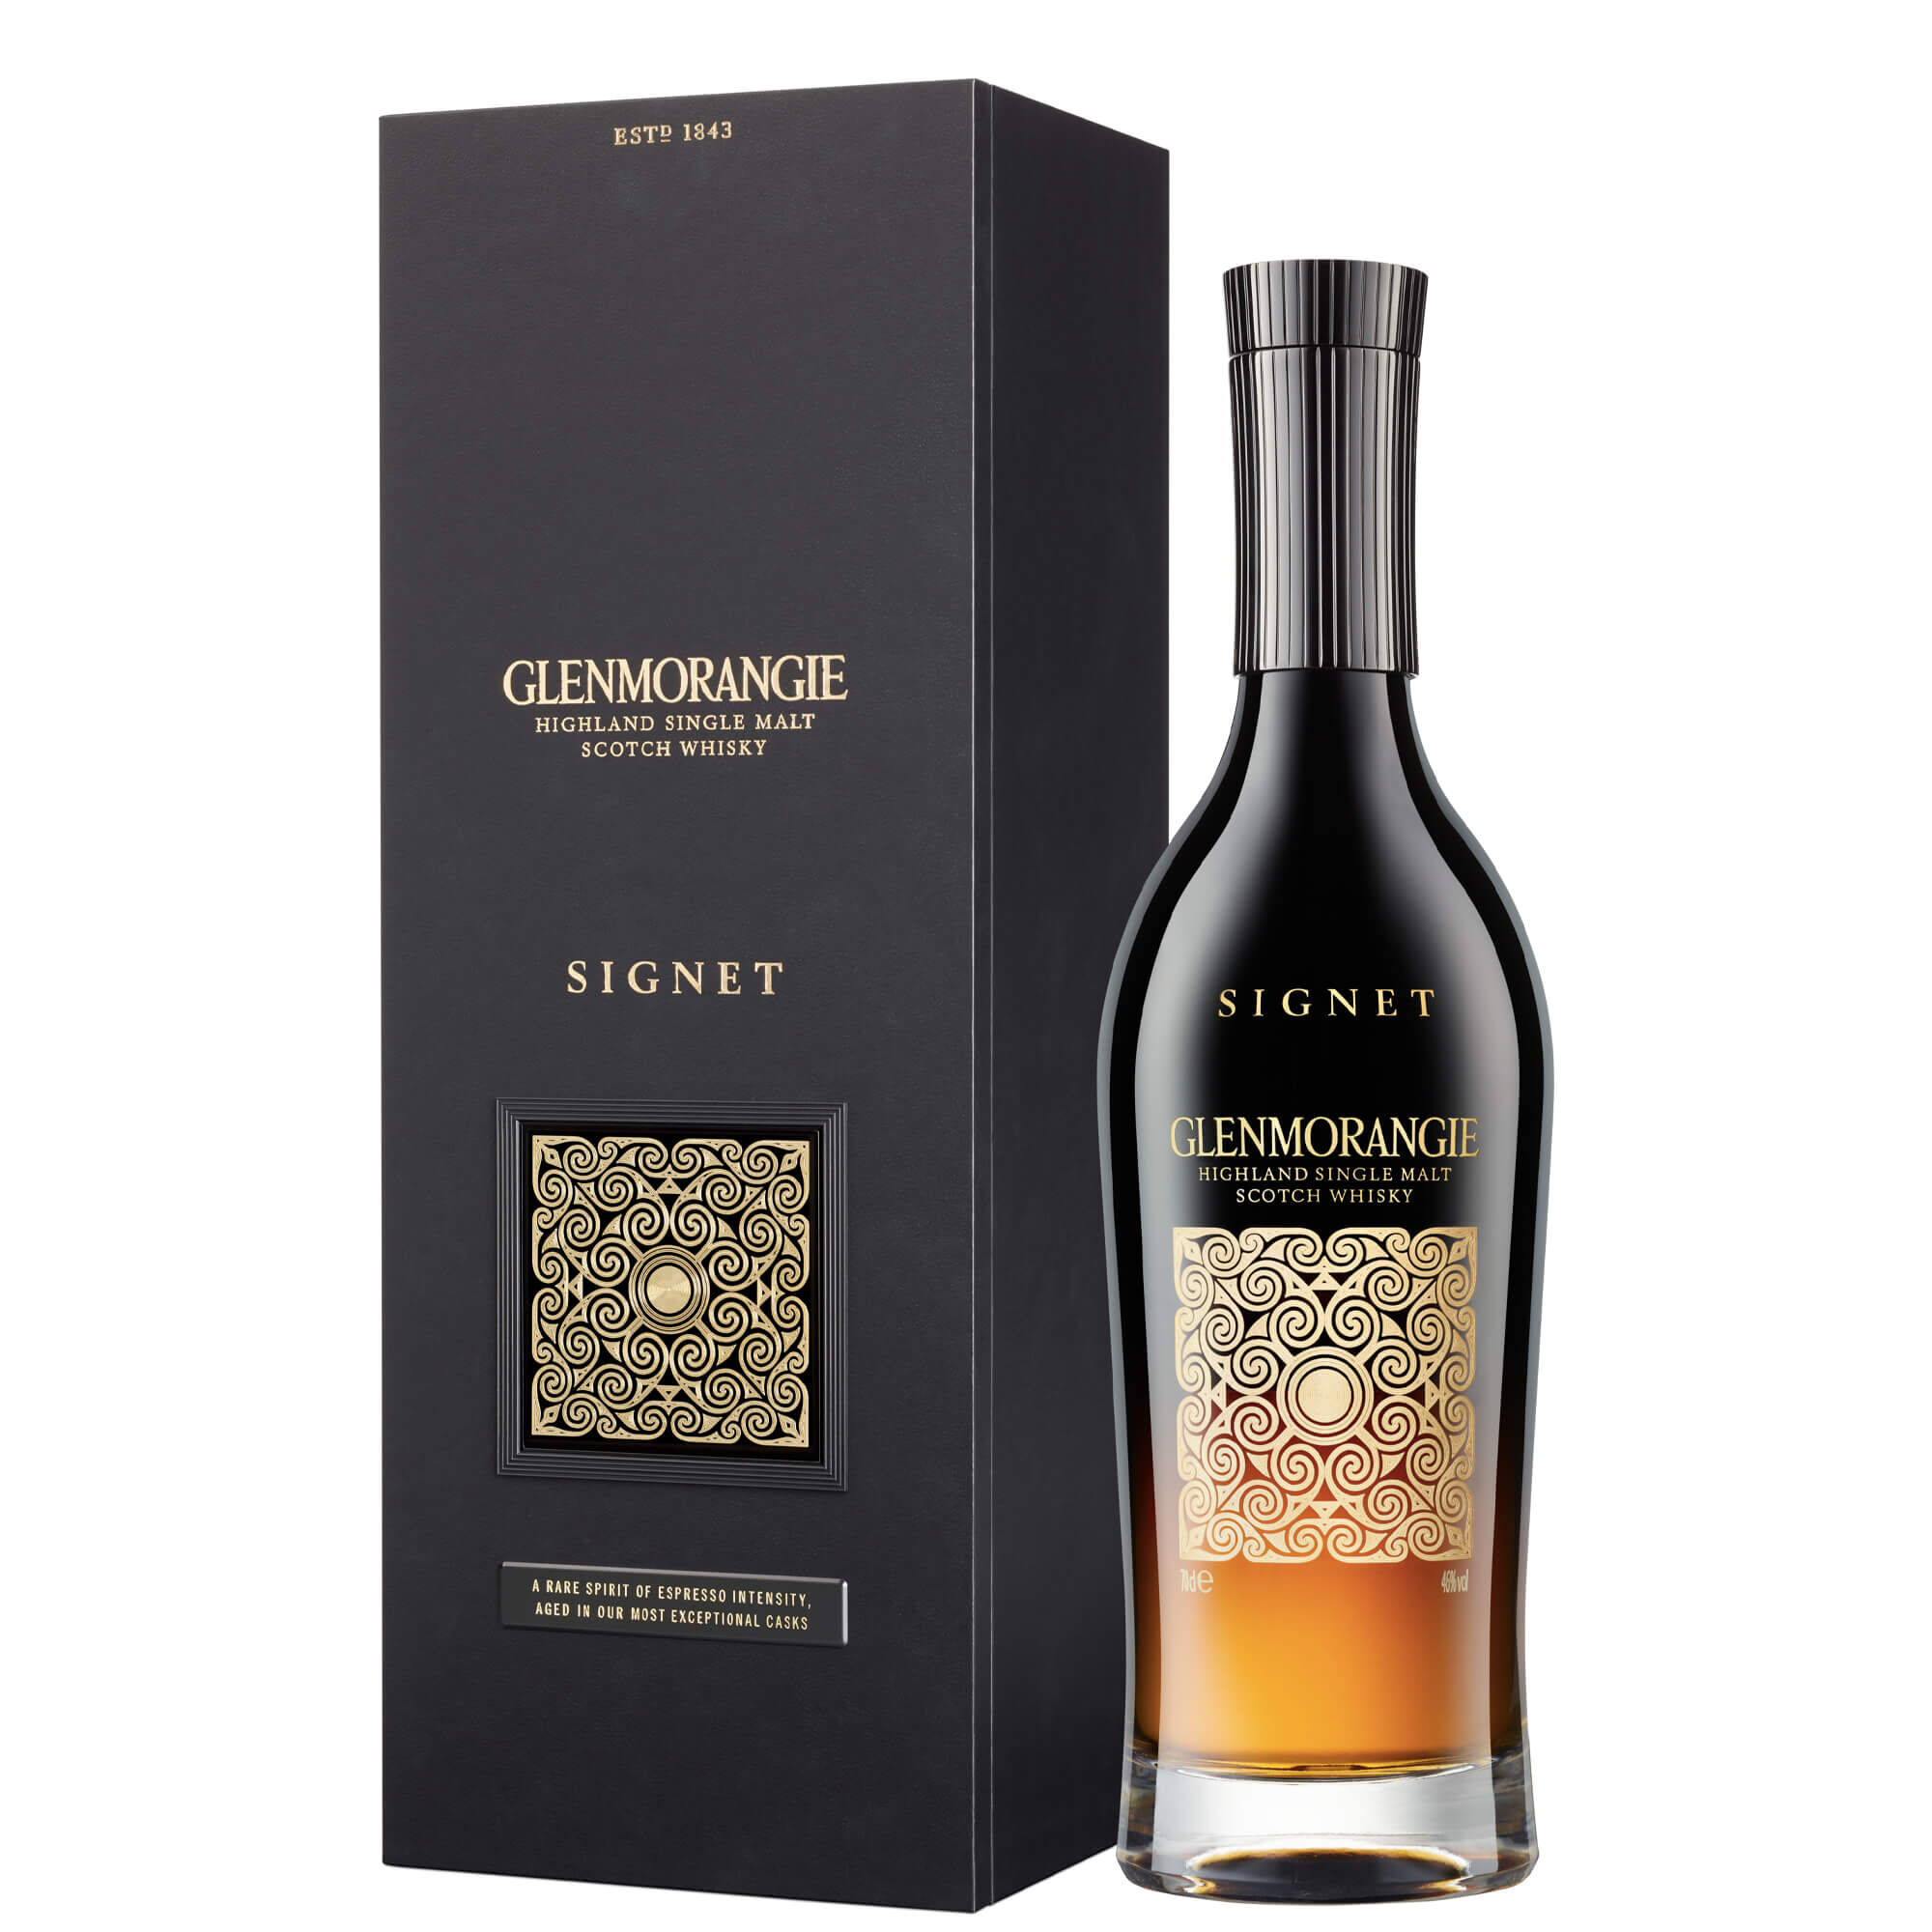 Glenmorangie Highland Single Malt Scotch Whisky Signet